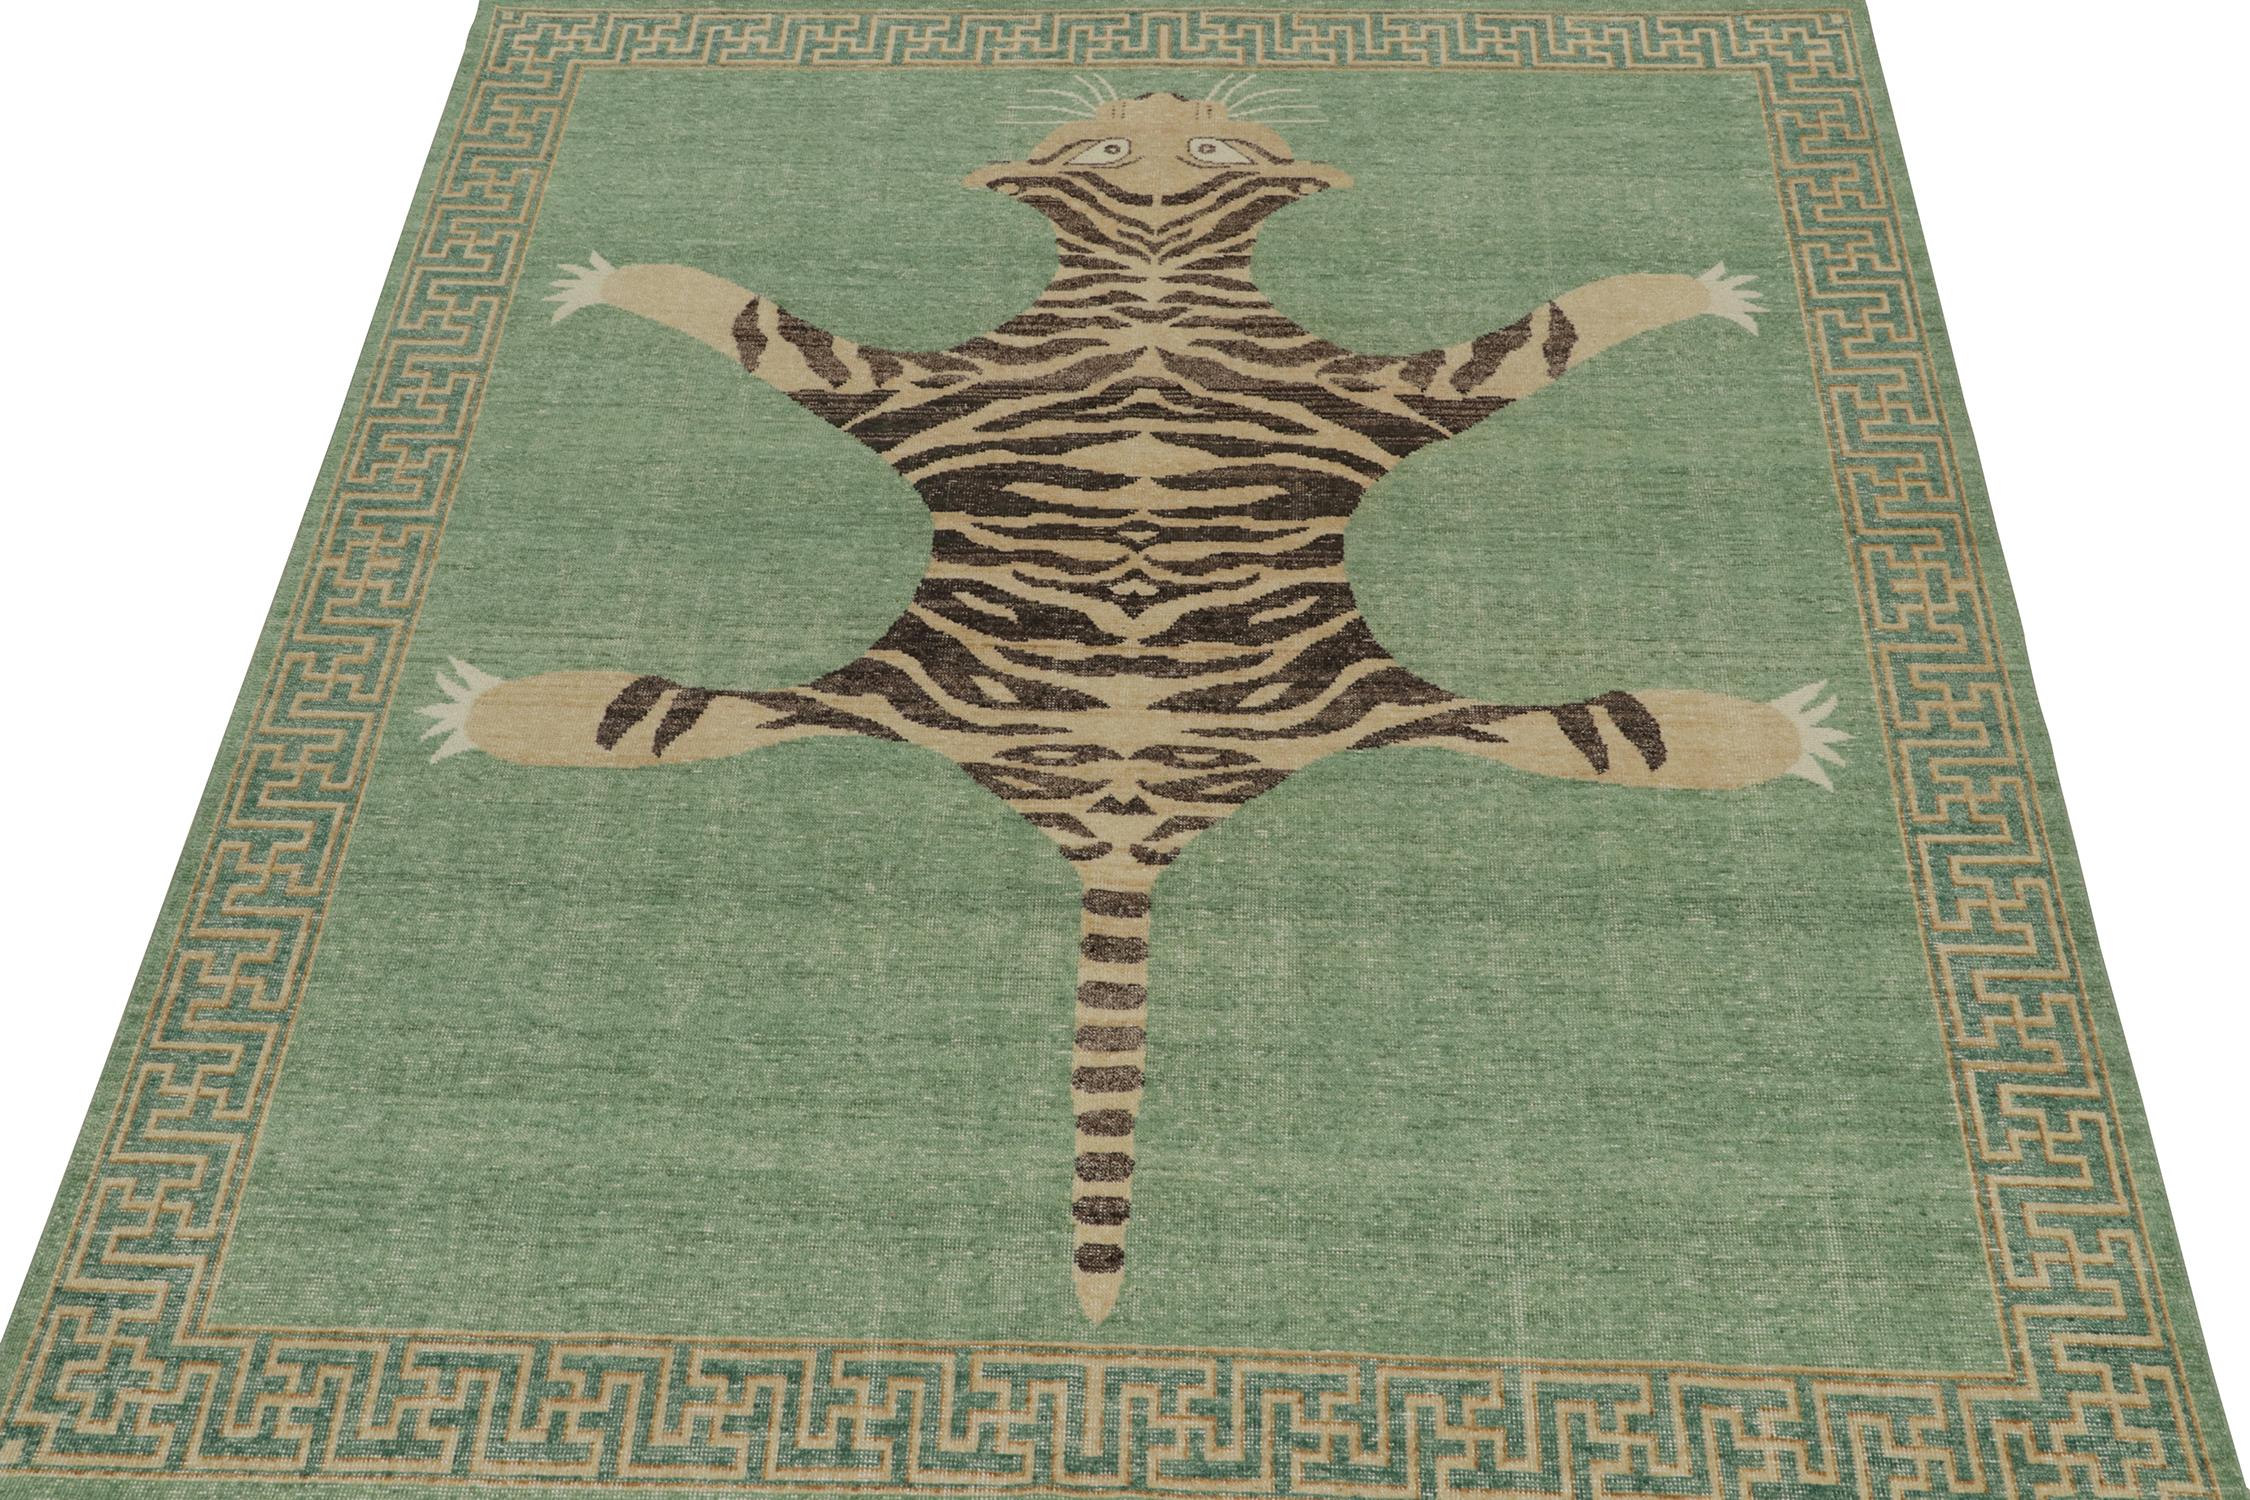 Indian Rug & Kilim’s Distressed Style Tiger Skin Rug in Green, Beige & Black Pictorial  For Sale